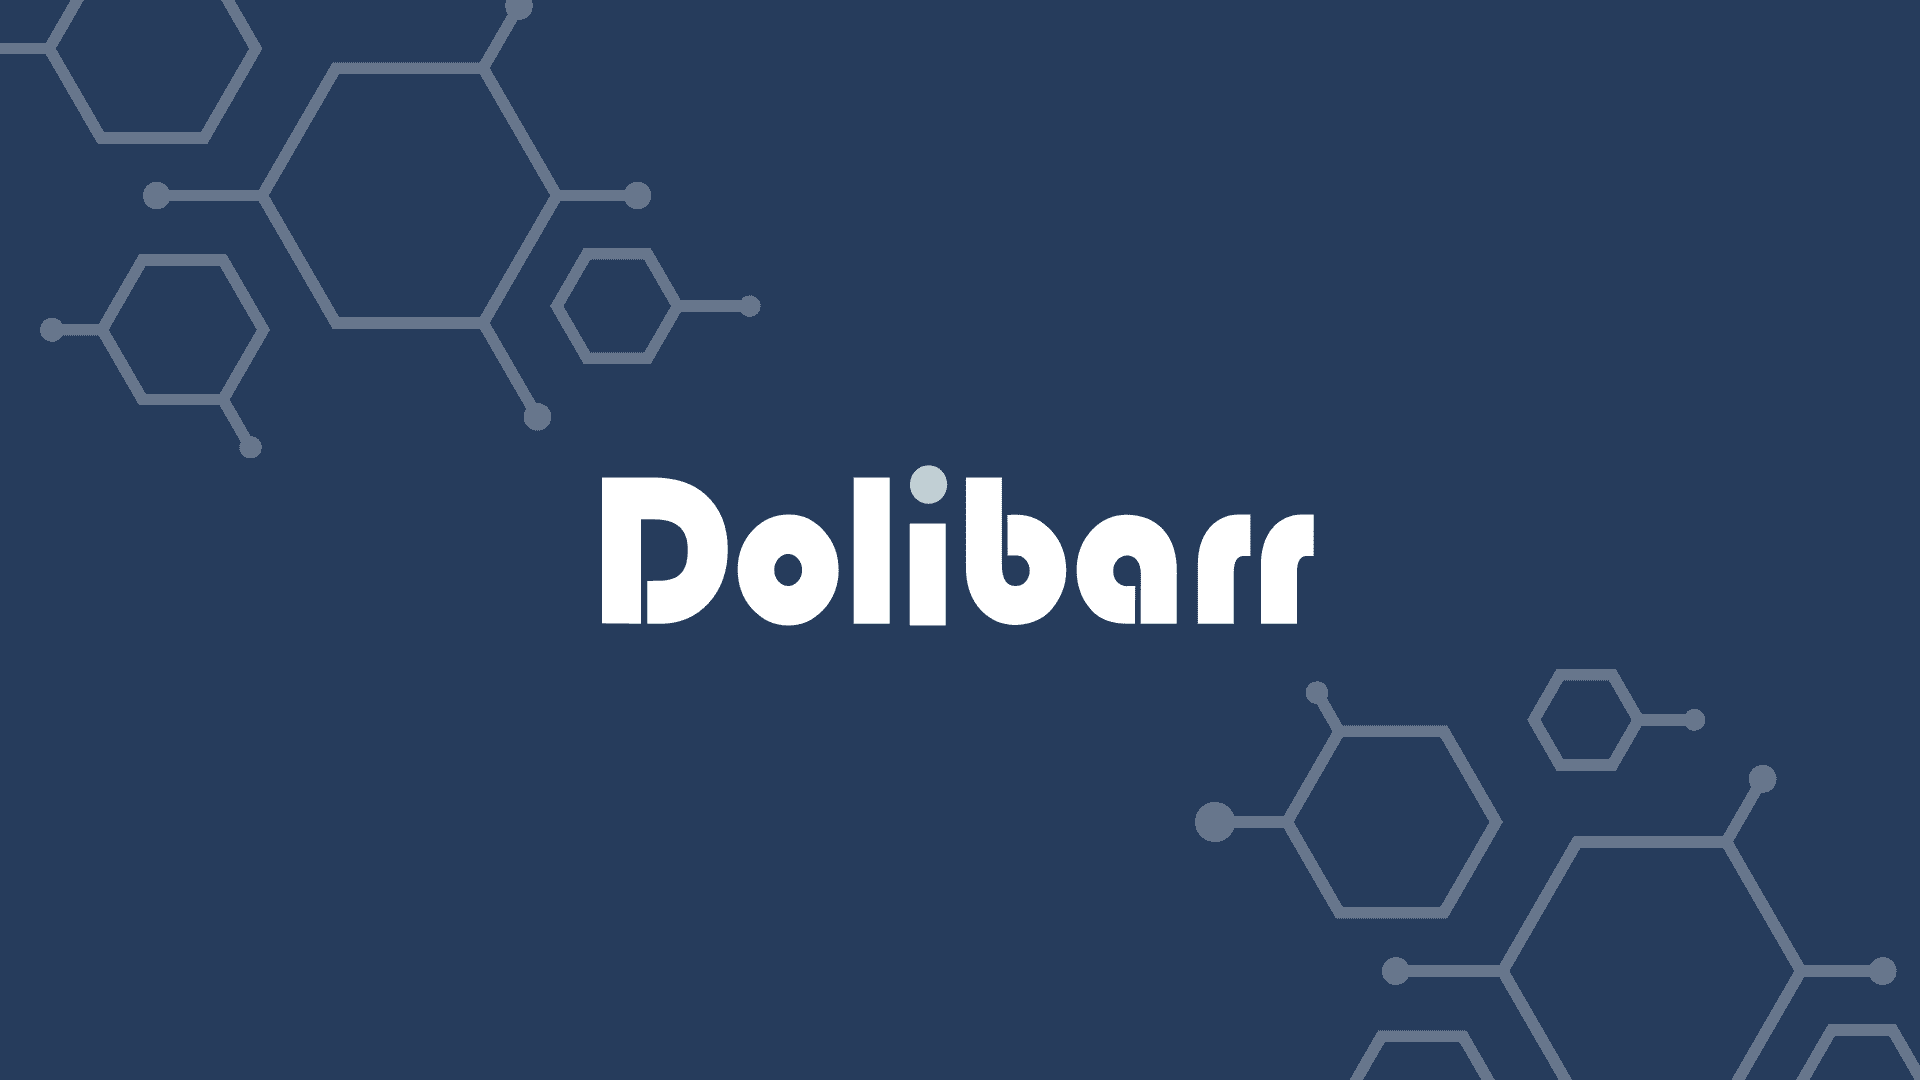 Dolibarr Logo